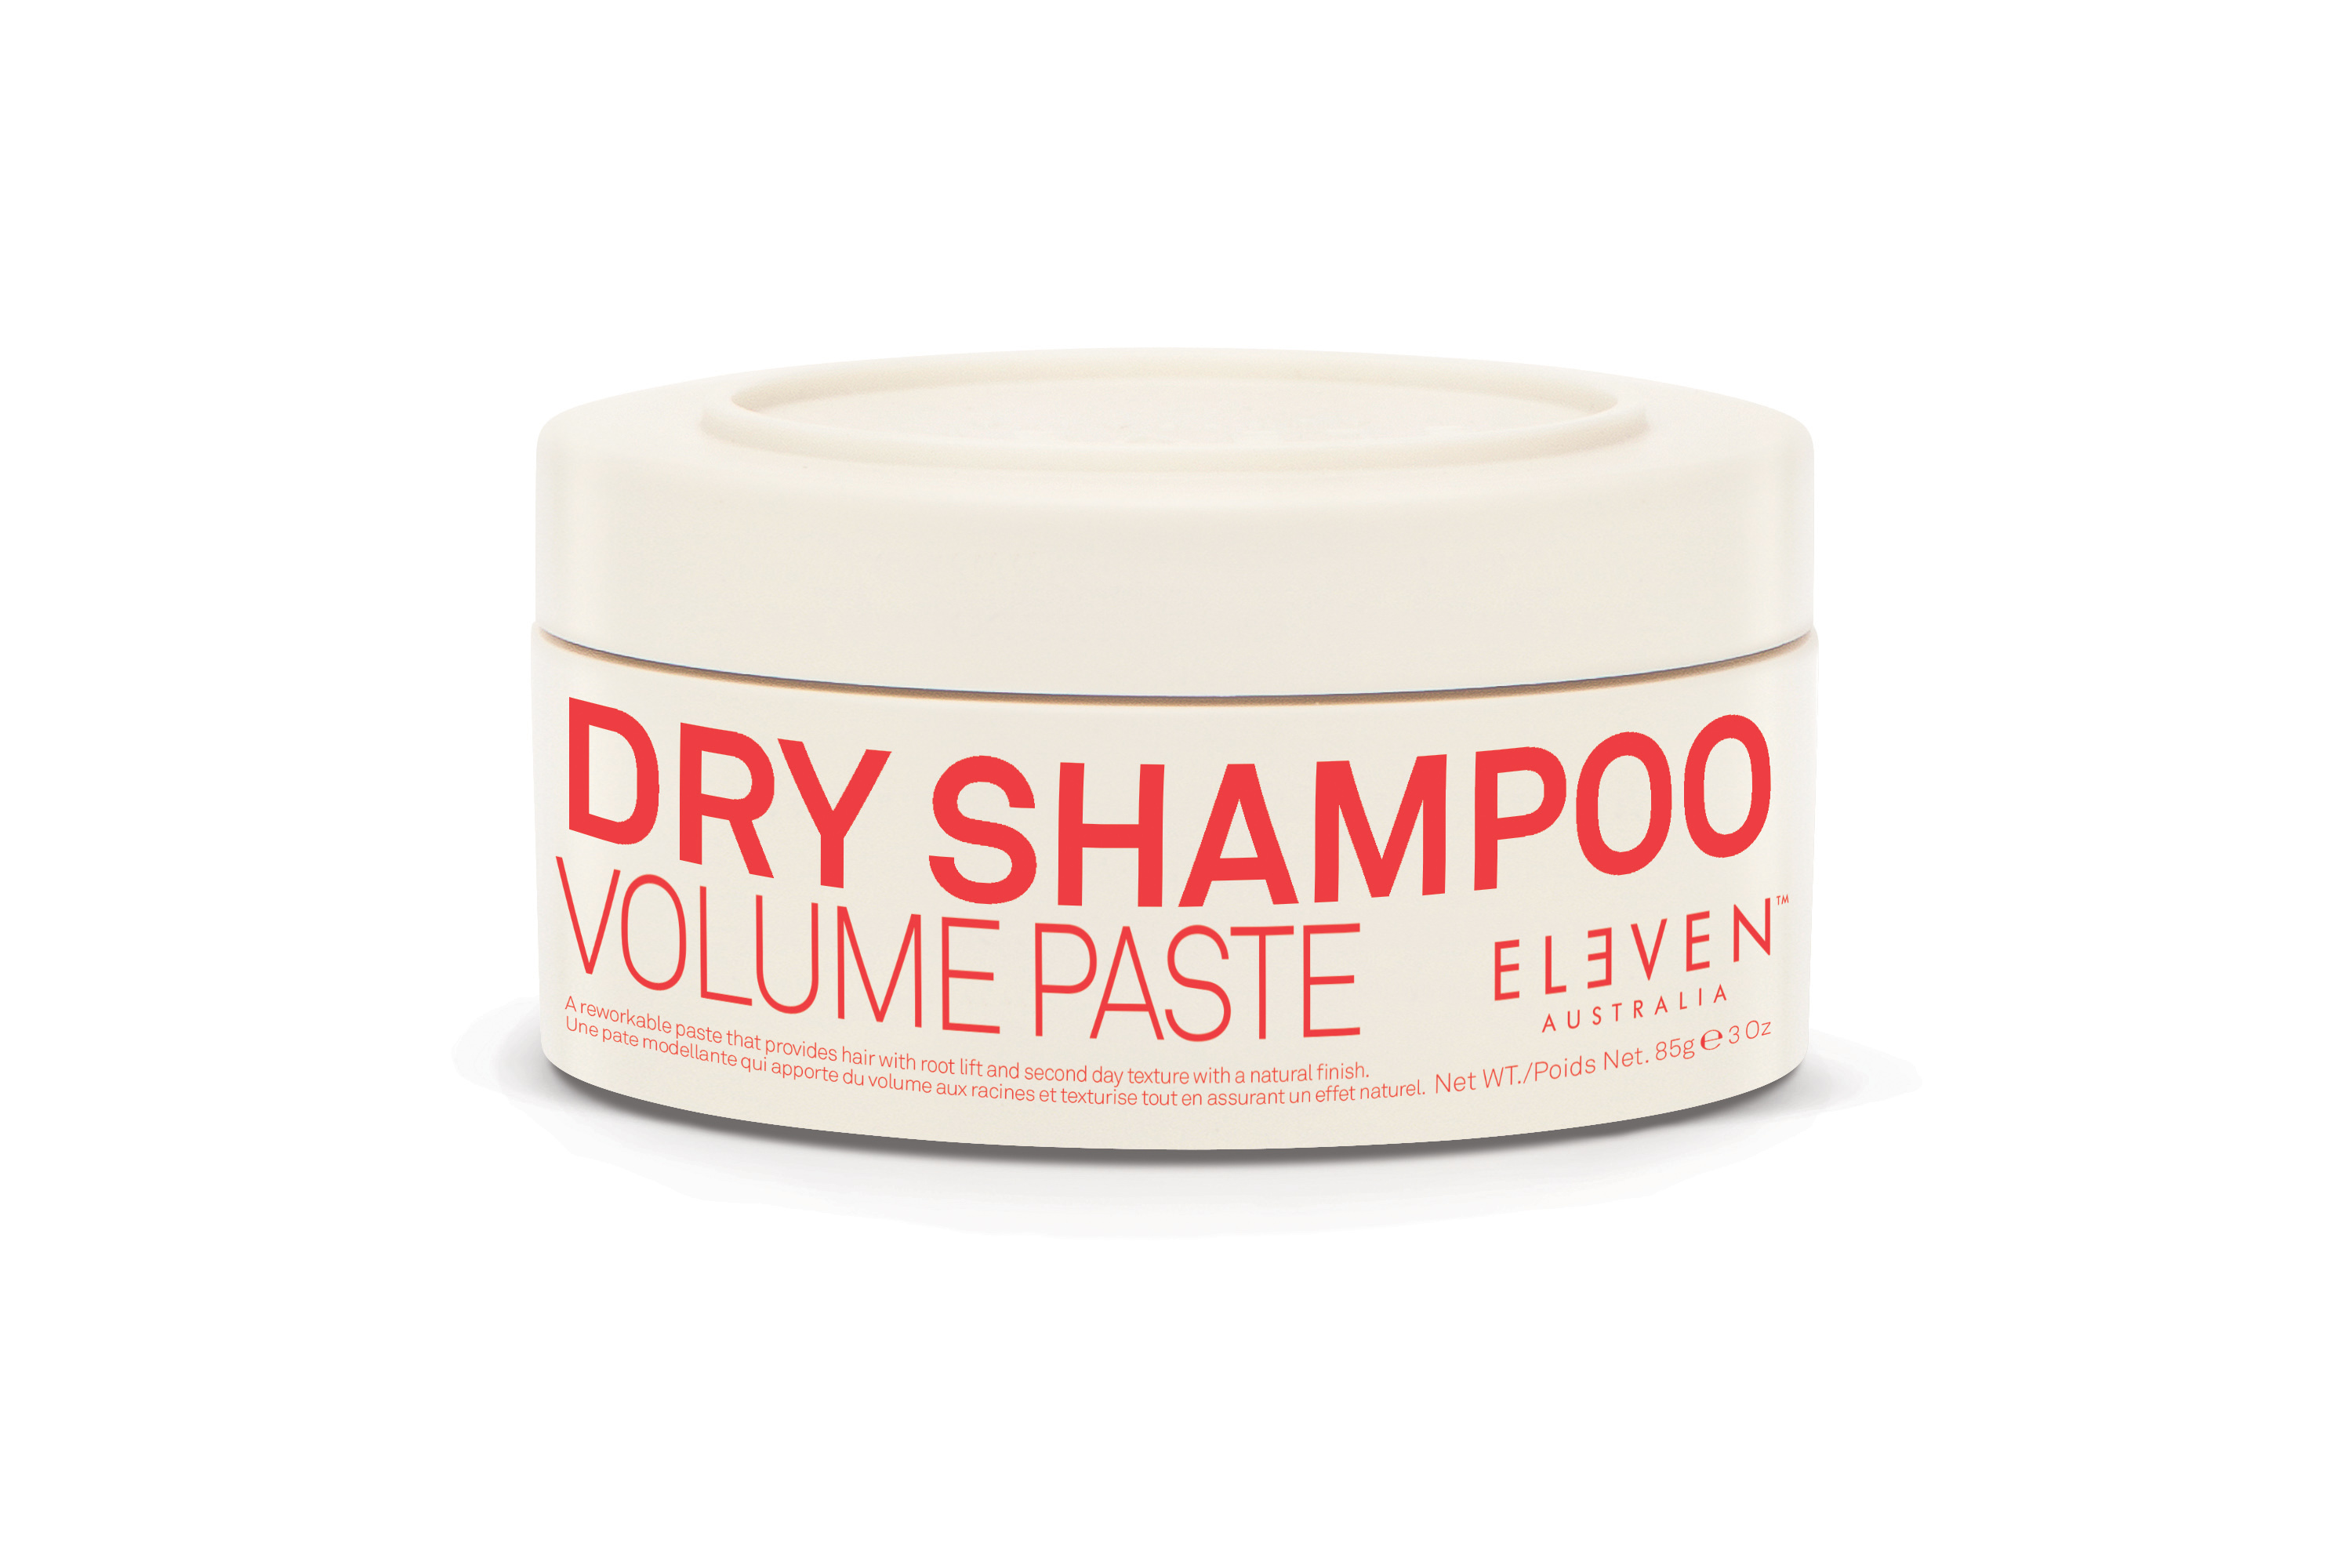 Dry Shampoo - krém-szárazsampon, volumennövelő porral  85 gr